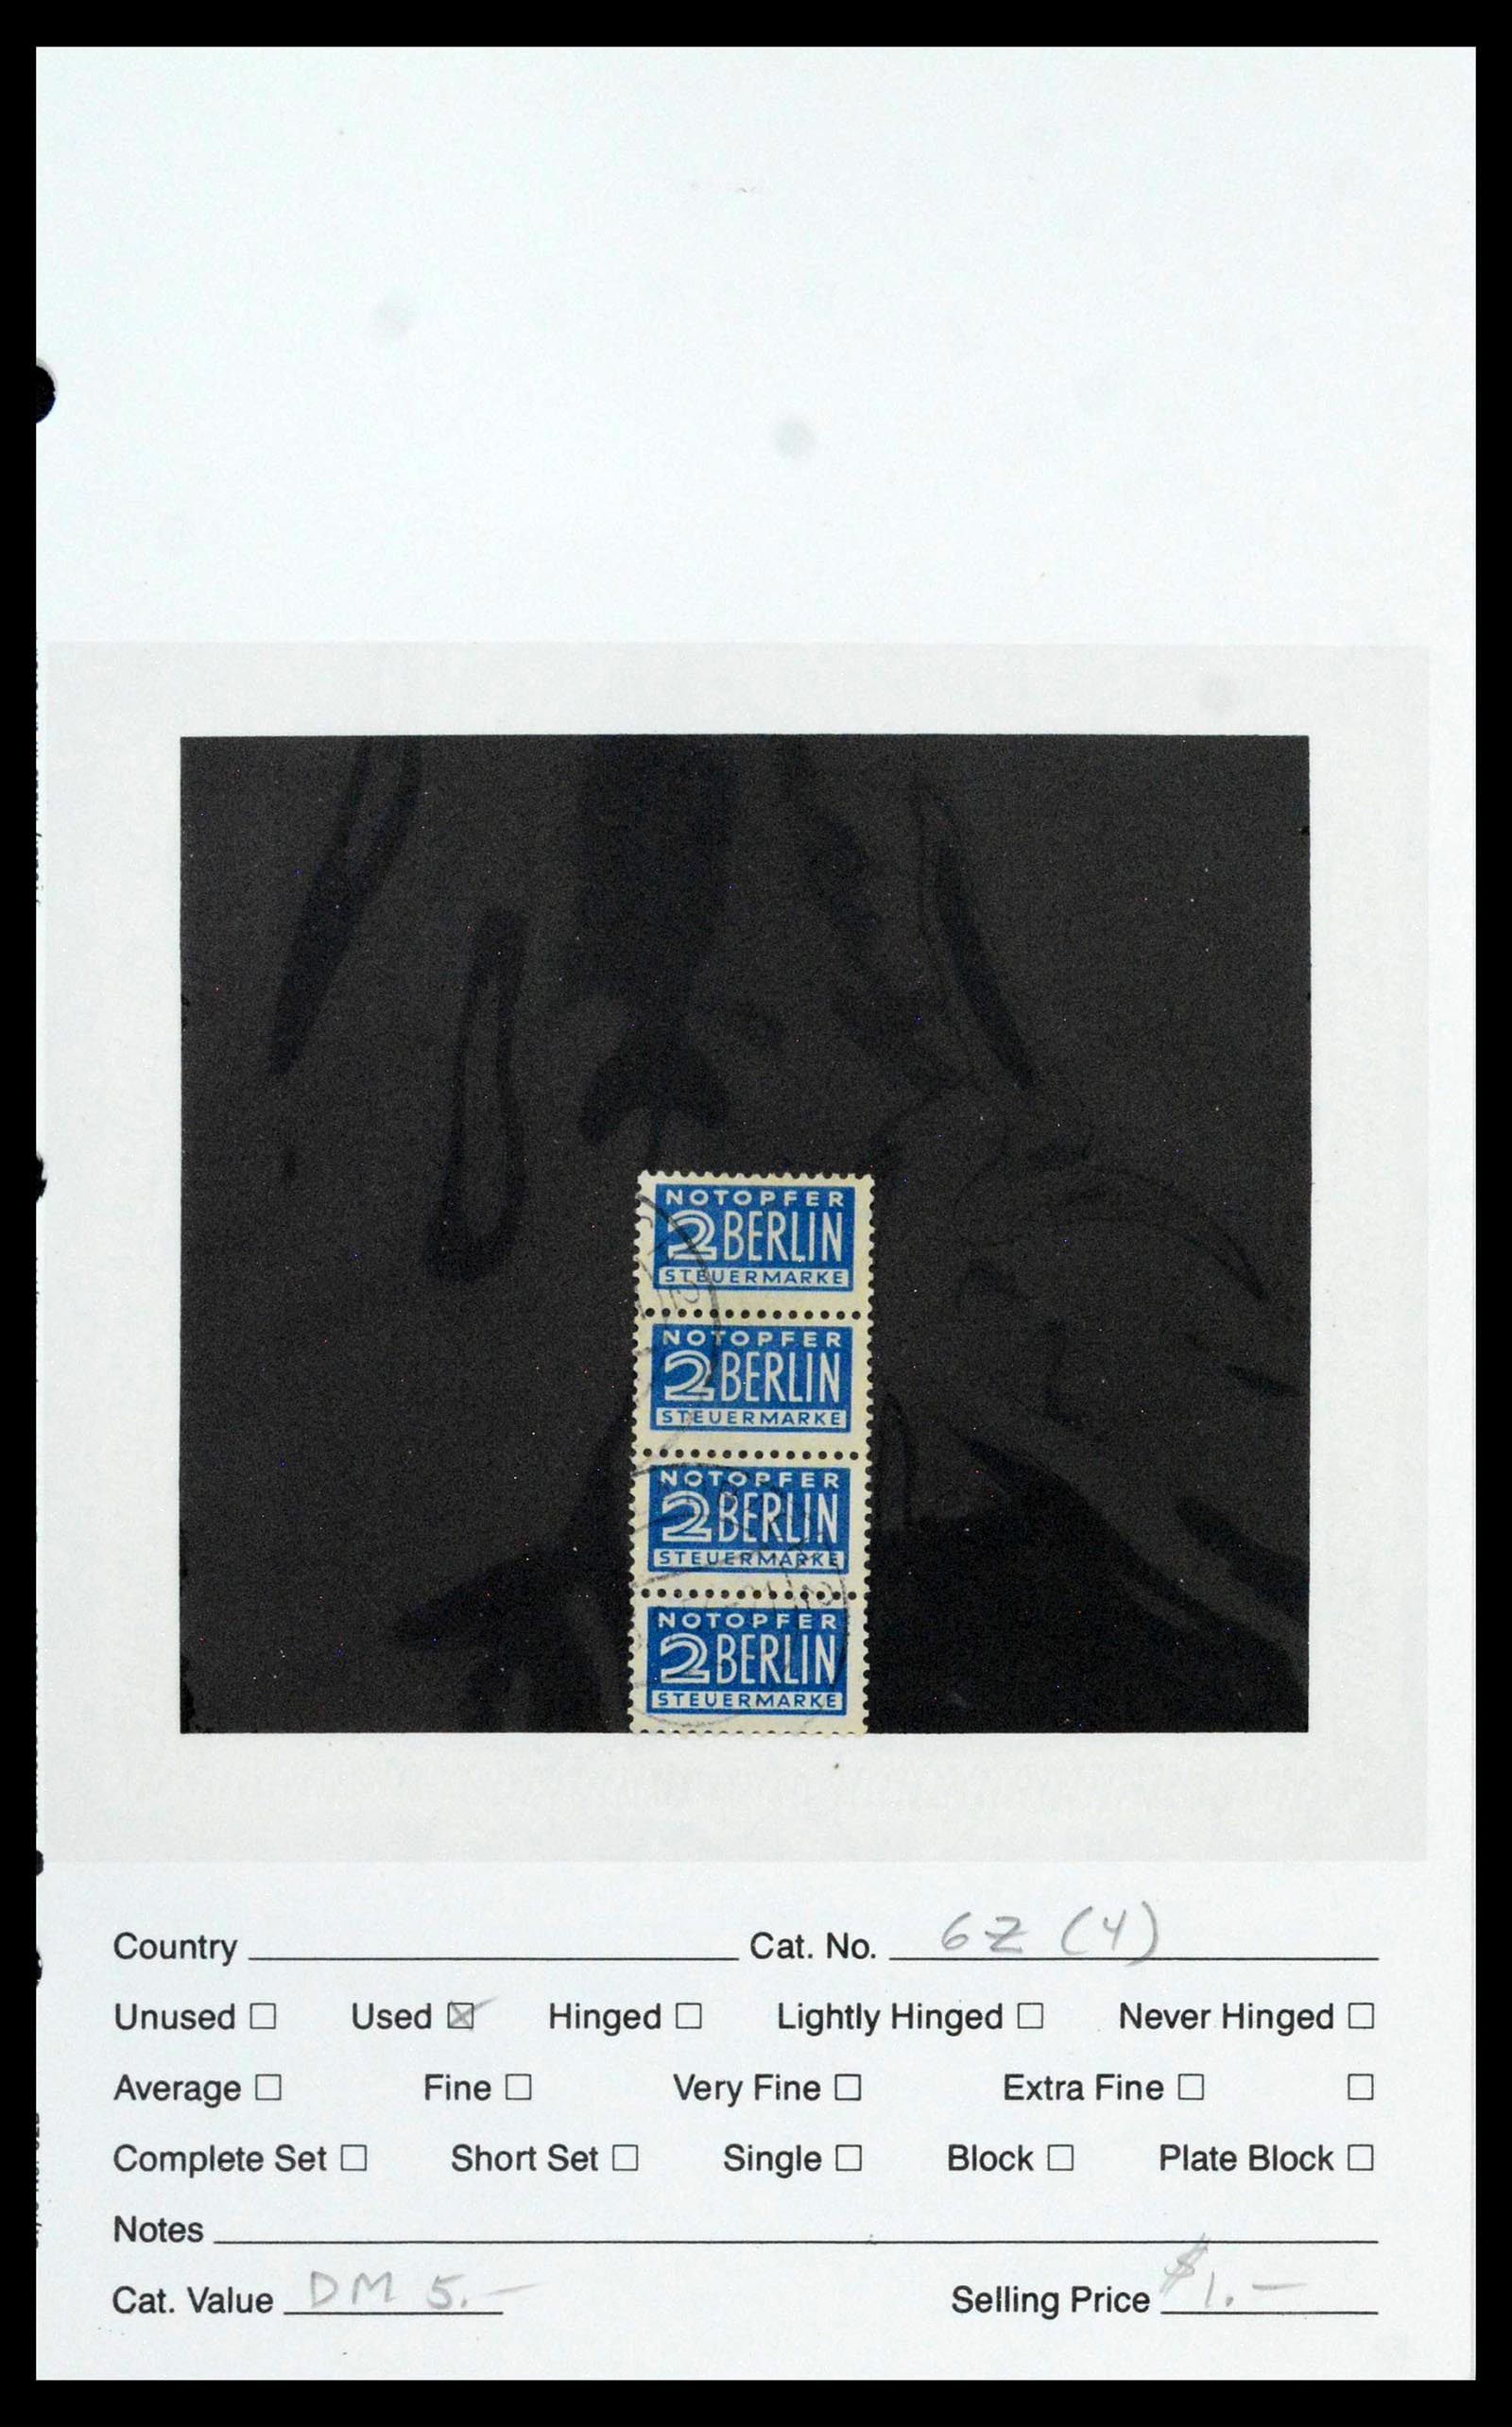 39459 0049 - Stamp collection 39459 Berlin notopfer 1948-1949.